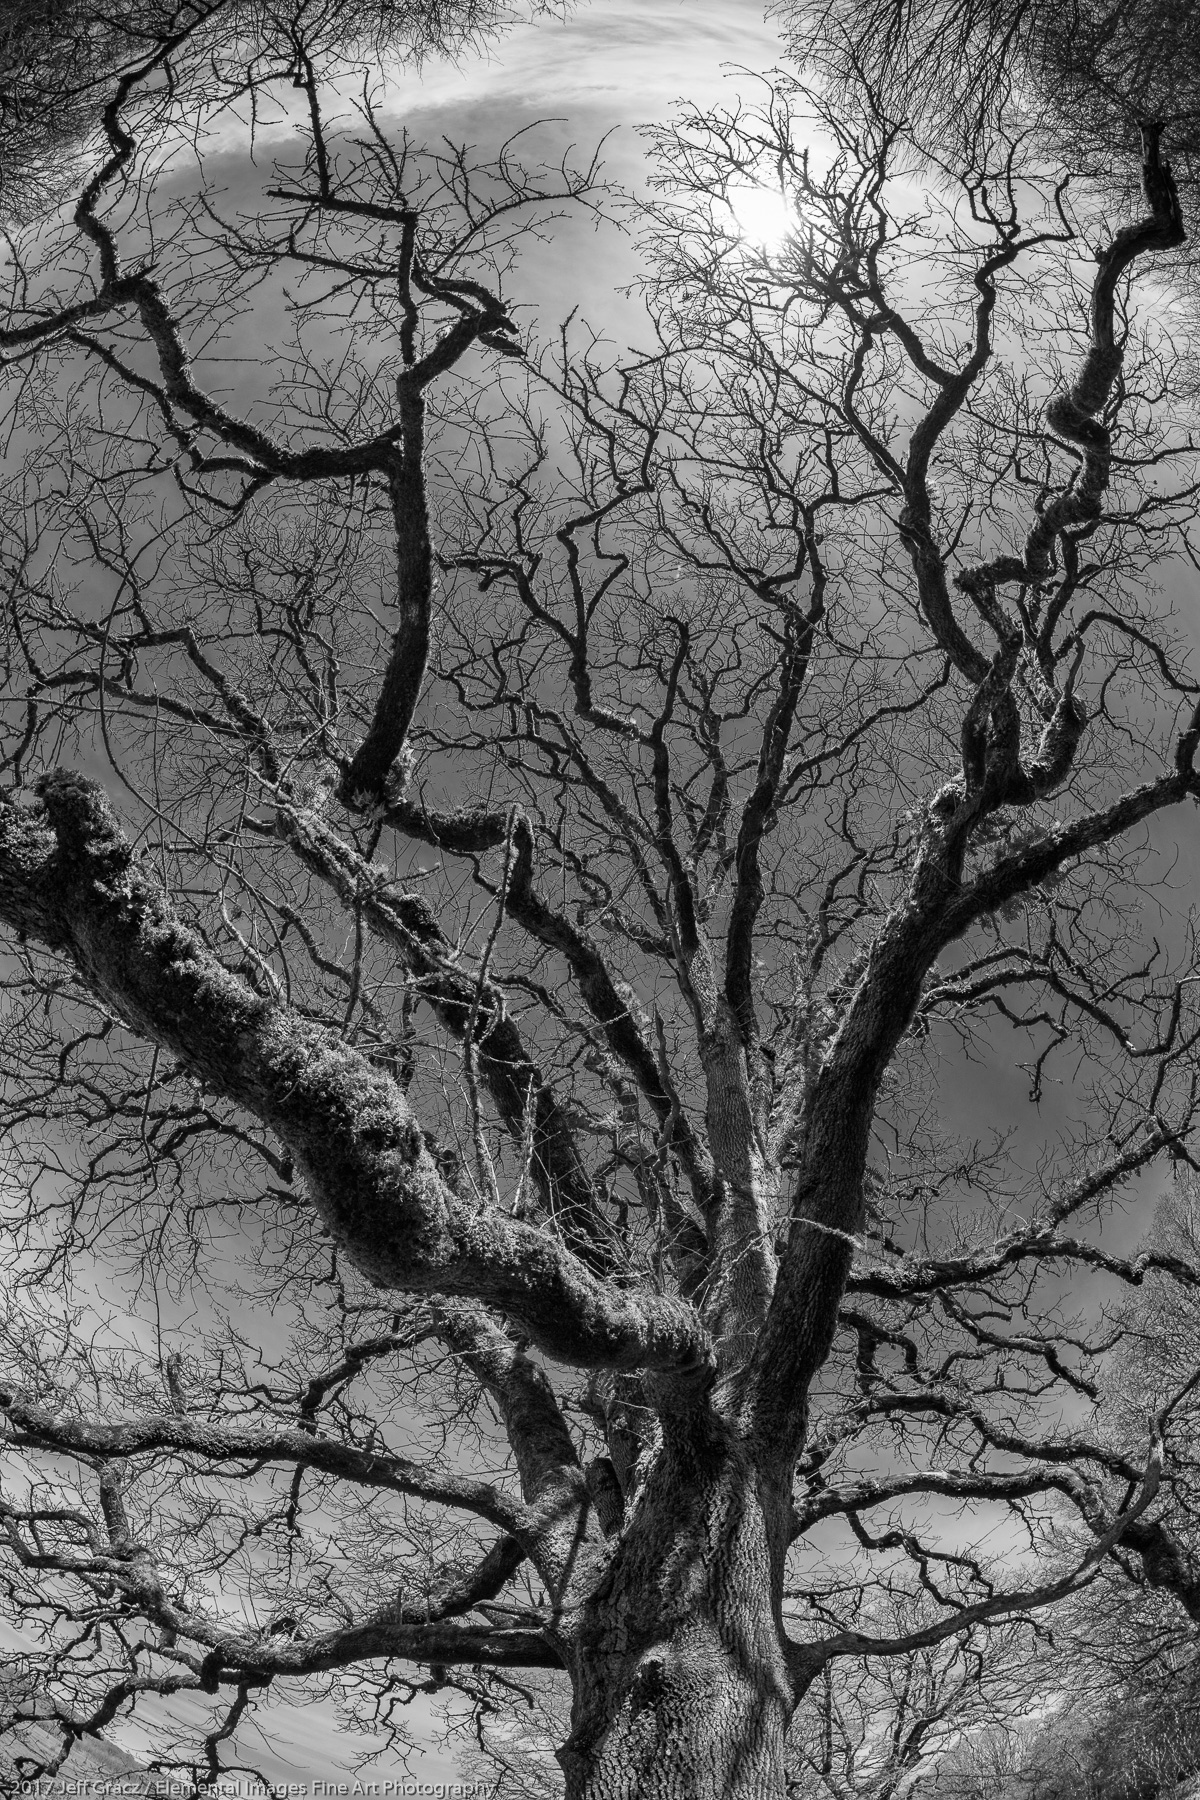 Oak Tree with Fisheye | Ridgefield National Wildlife Refuge | WA | USA - © 2017 Jeff Gracz / Elemental Images Fine Art Photography - All Rights Reserved Worldwide